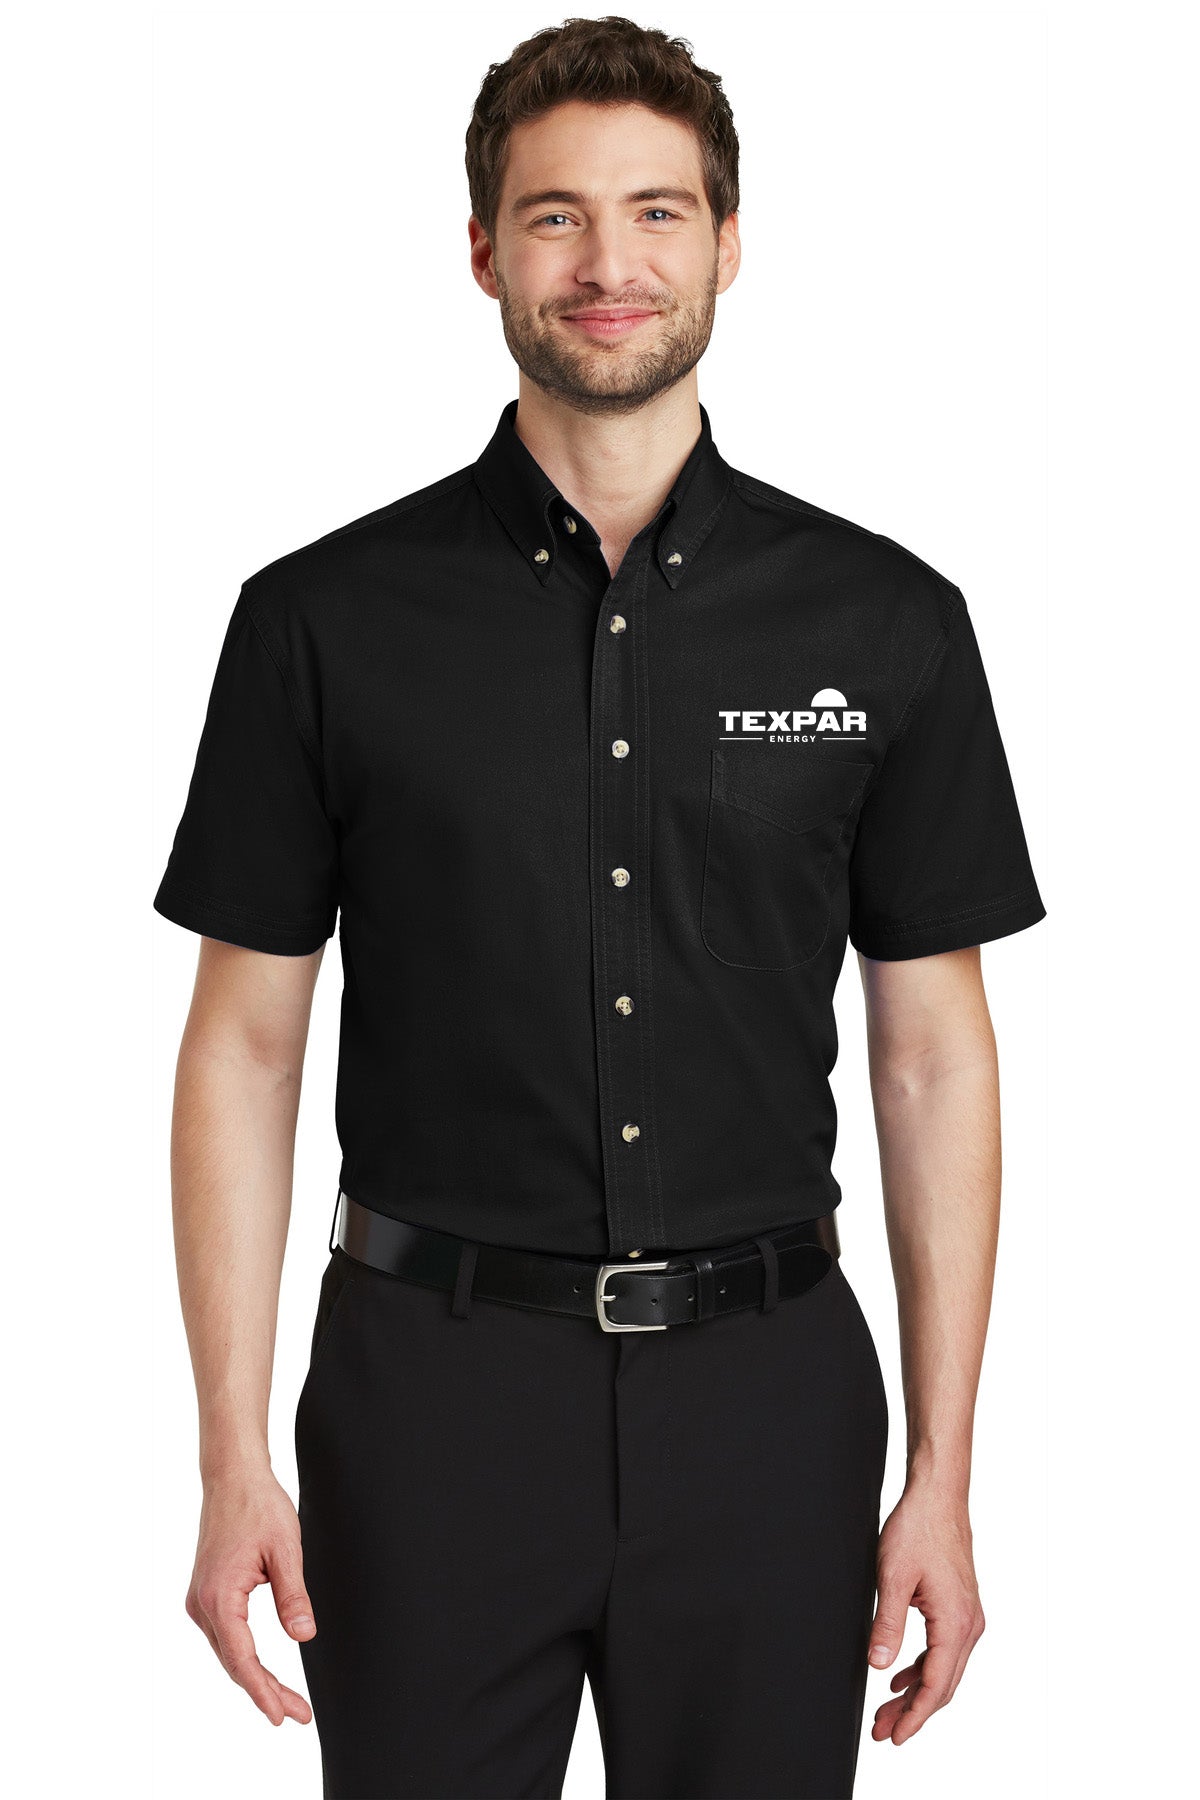 TexPar Energy Short Sleeve Button Up